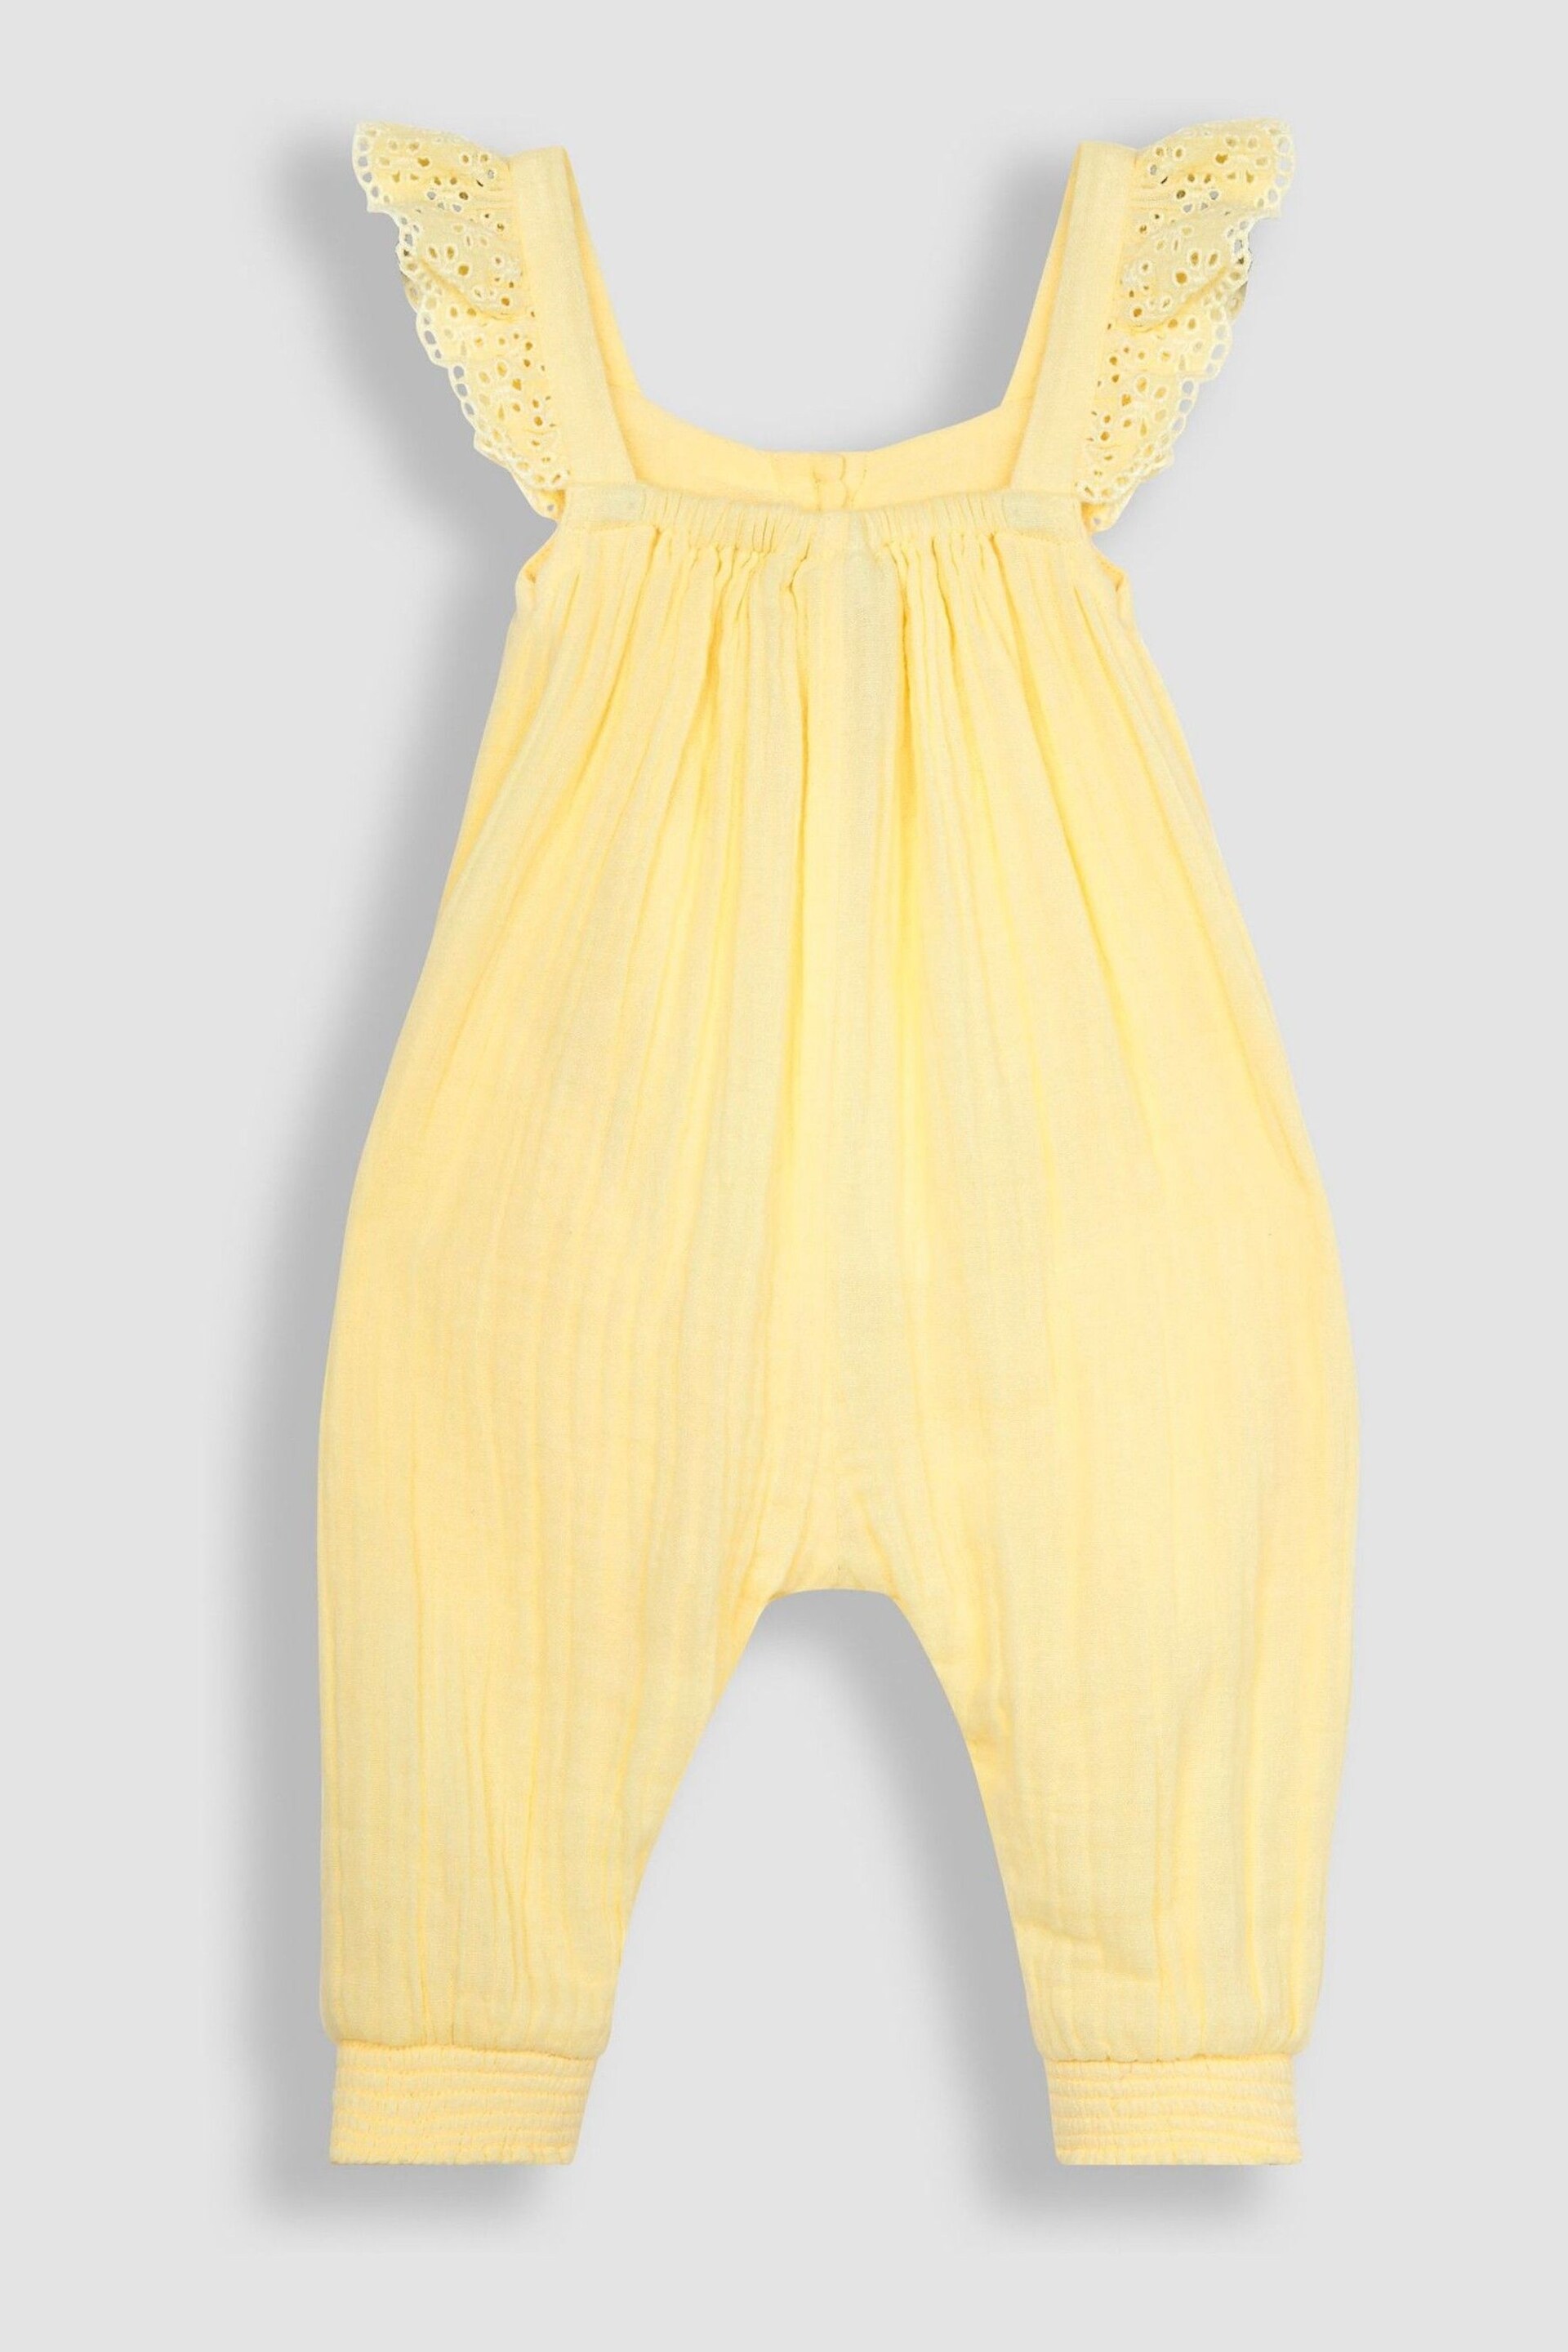 JoJo Maman Bébé Yellow 2-Piece Cheesecloth Jumpsuit & Hat Set - Image 3 of 5